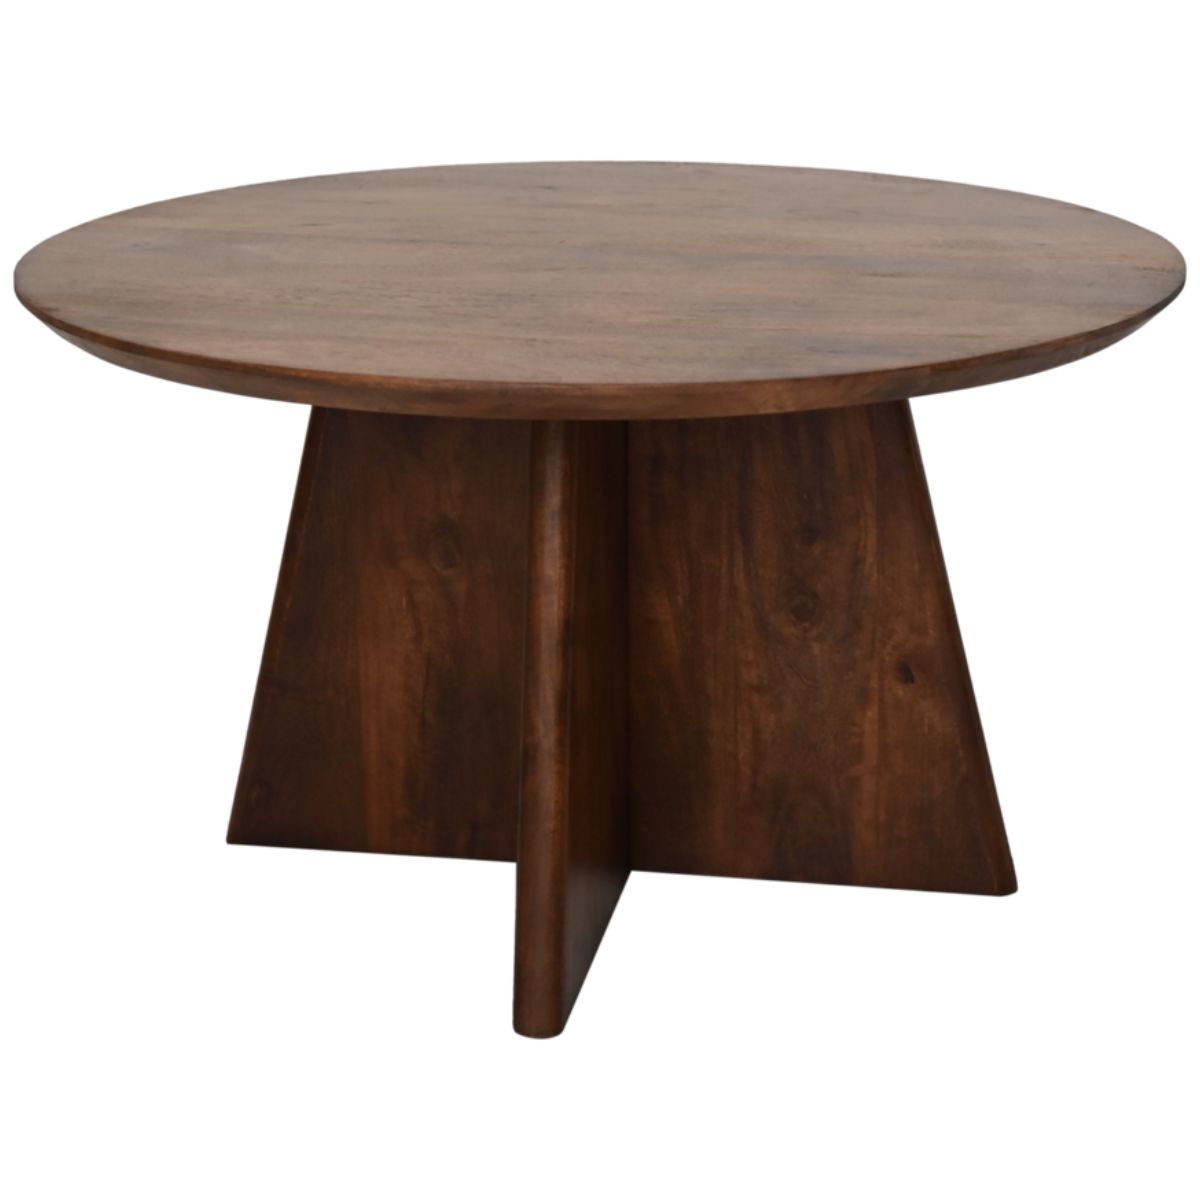 WoodSelections' ronde salontafel met robuuste kruispoot voegt stoere elegantie toe aan je woonkamerinterieur.